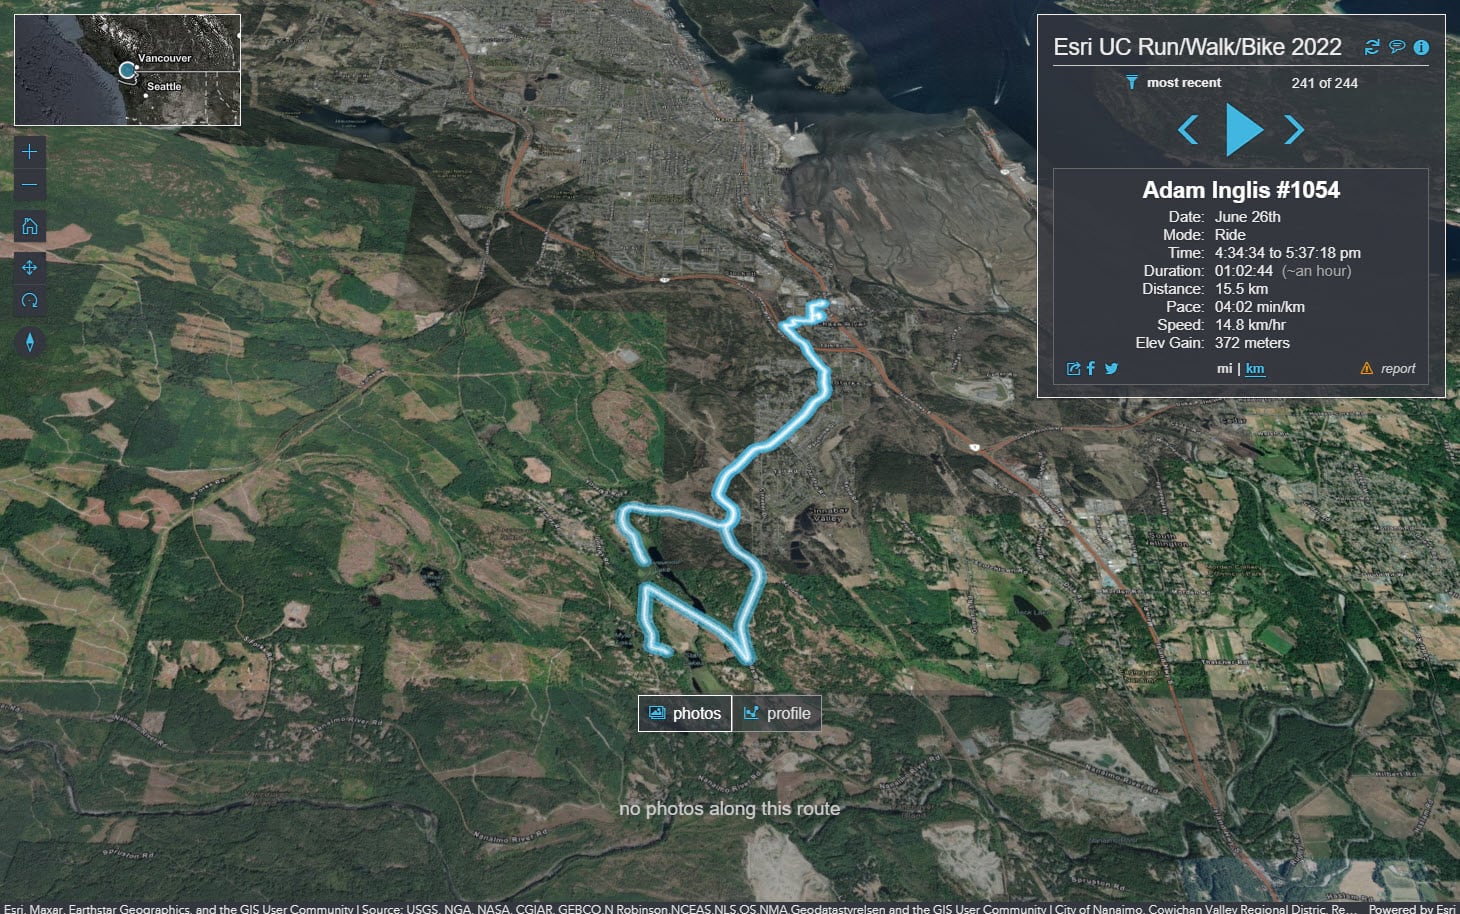 Esri UC Run/Walk/Bike 2022 event route in Vancouver shown on 3D app